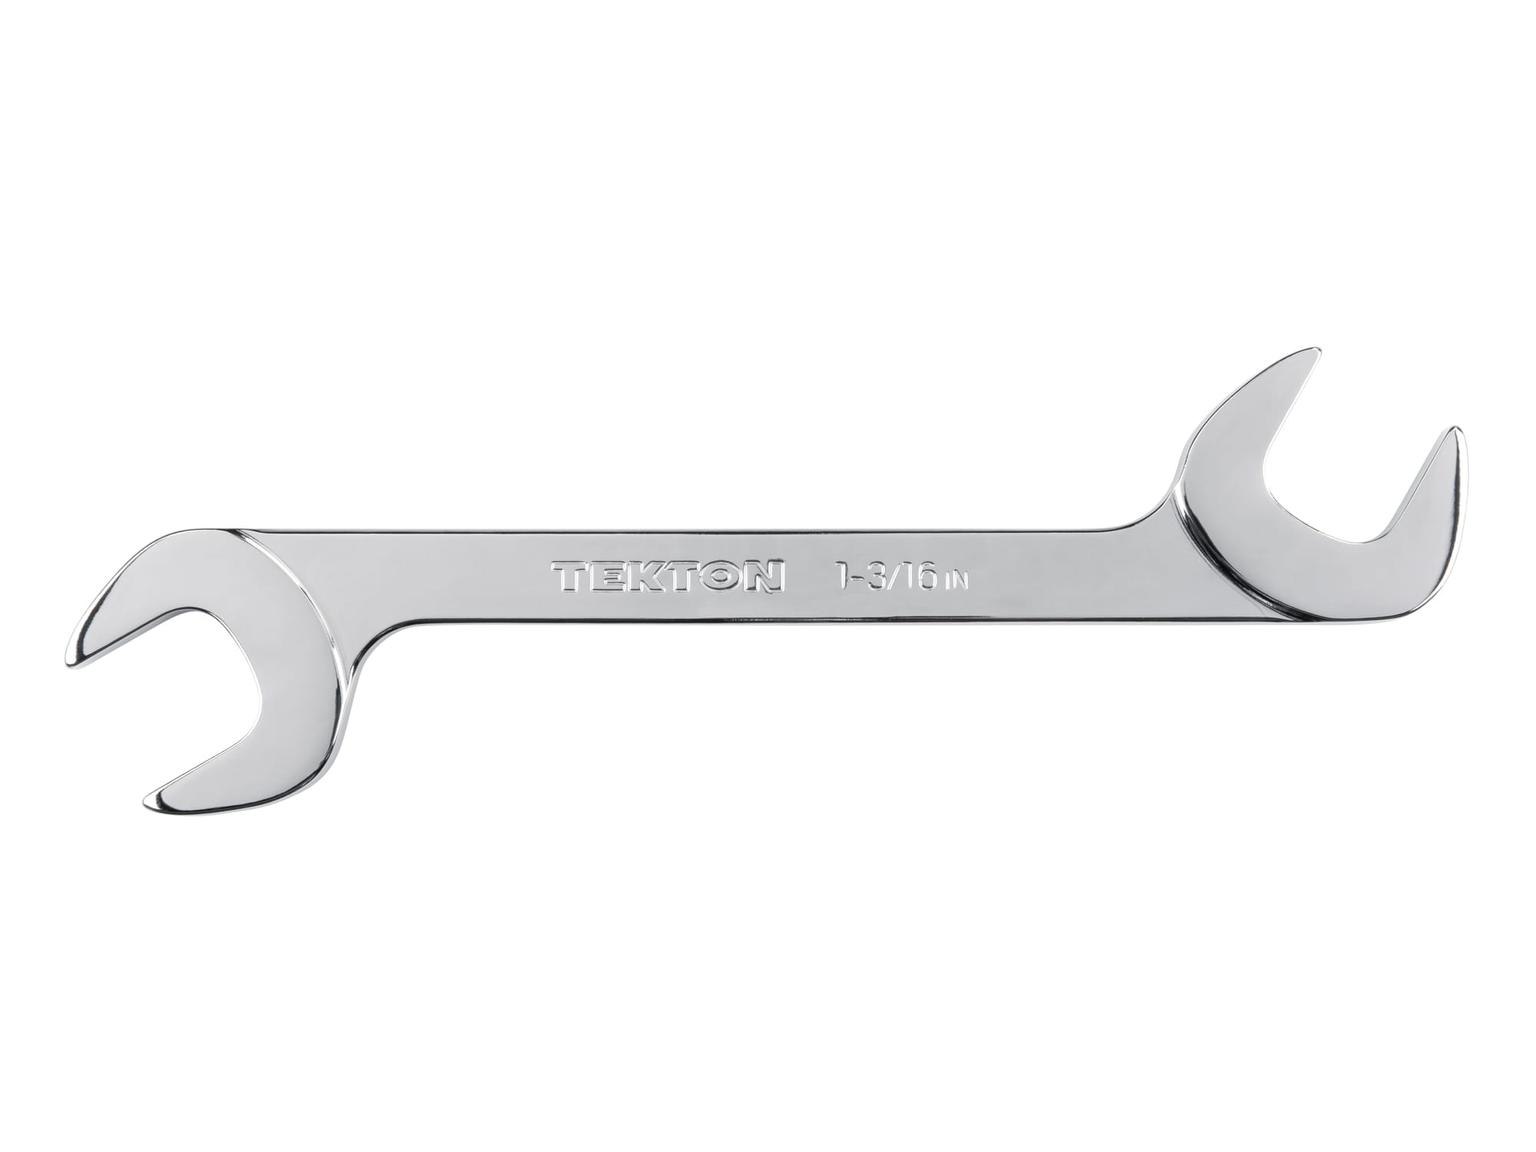 TEKTON WAE83030-T 1-3/16 Inch Angle Head Open End Wrench